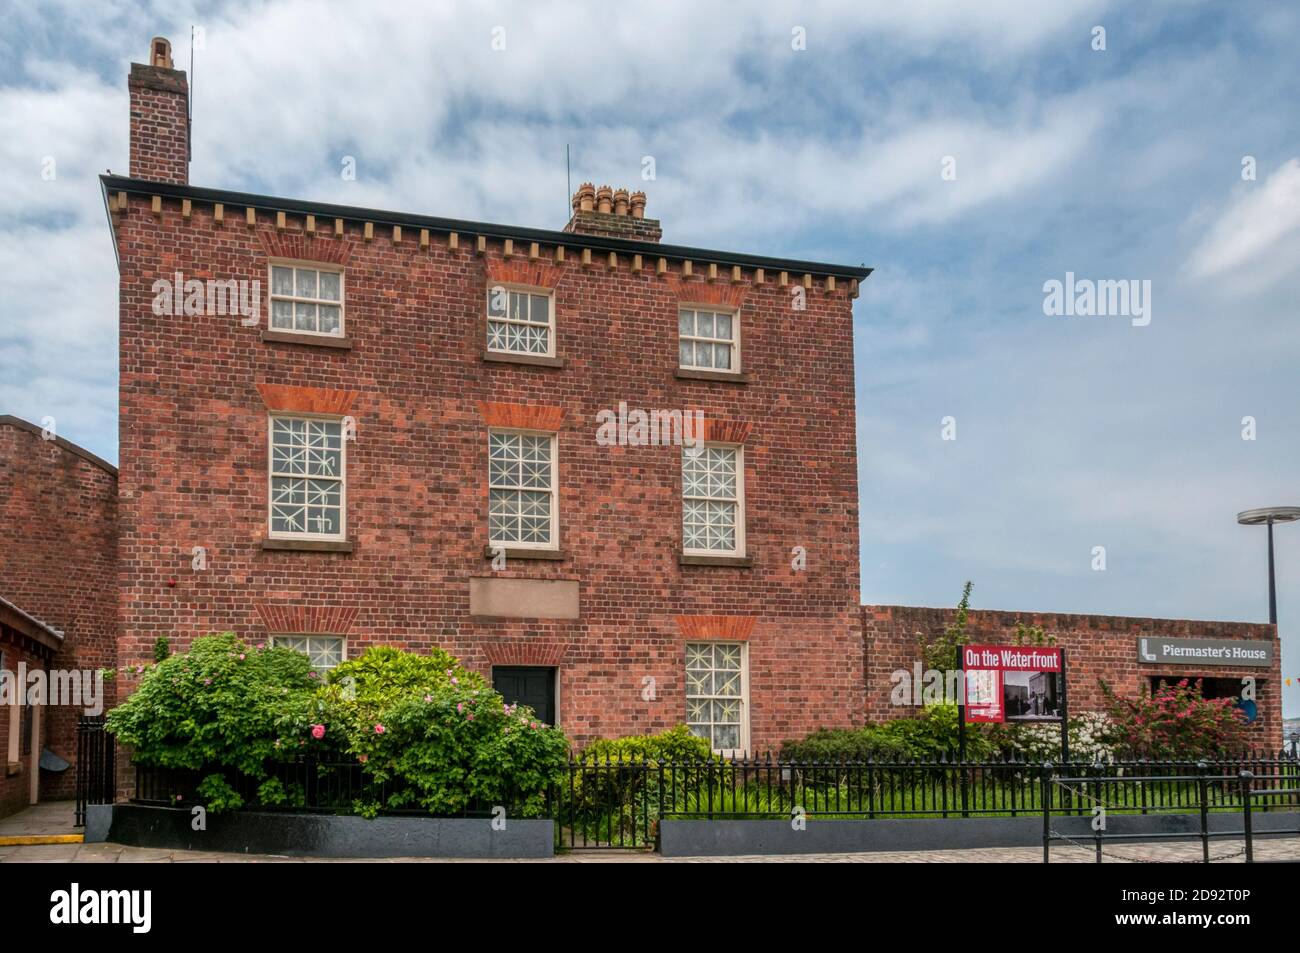 Das Piermaster's House am Liverpooler Ufer. Jetzt Teil der National Museums Liverpool. Stockfoto